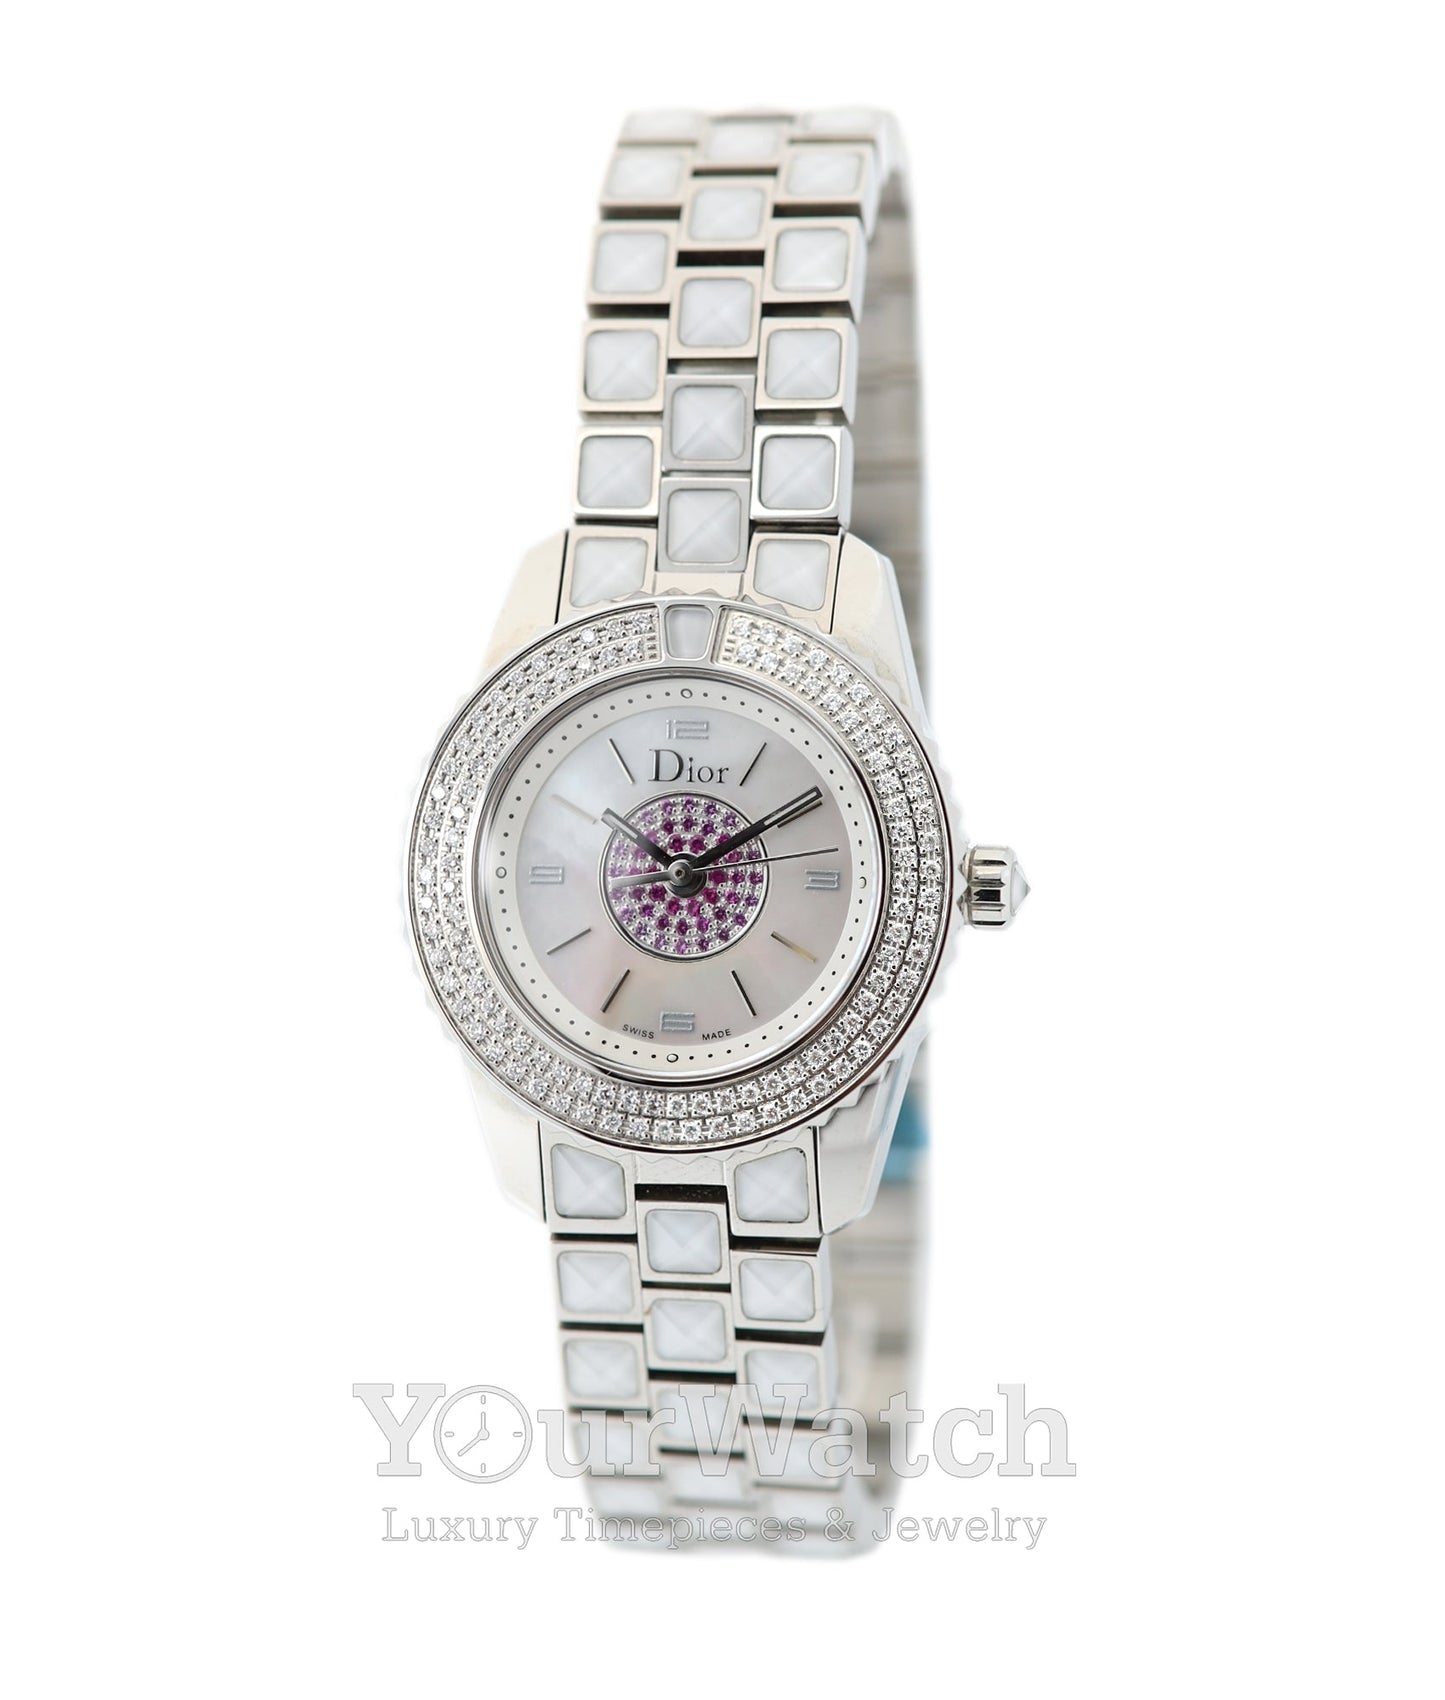 Christian Dior Christal Women's Quartz Watch cd112118m002